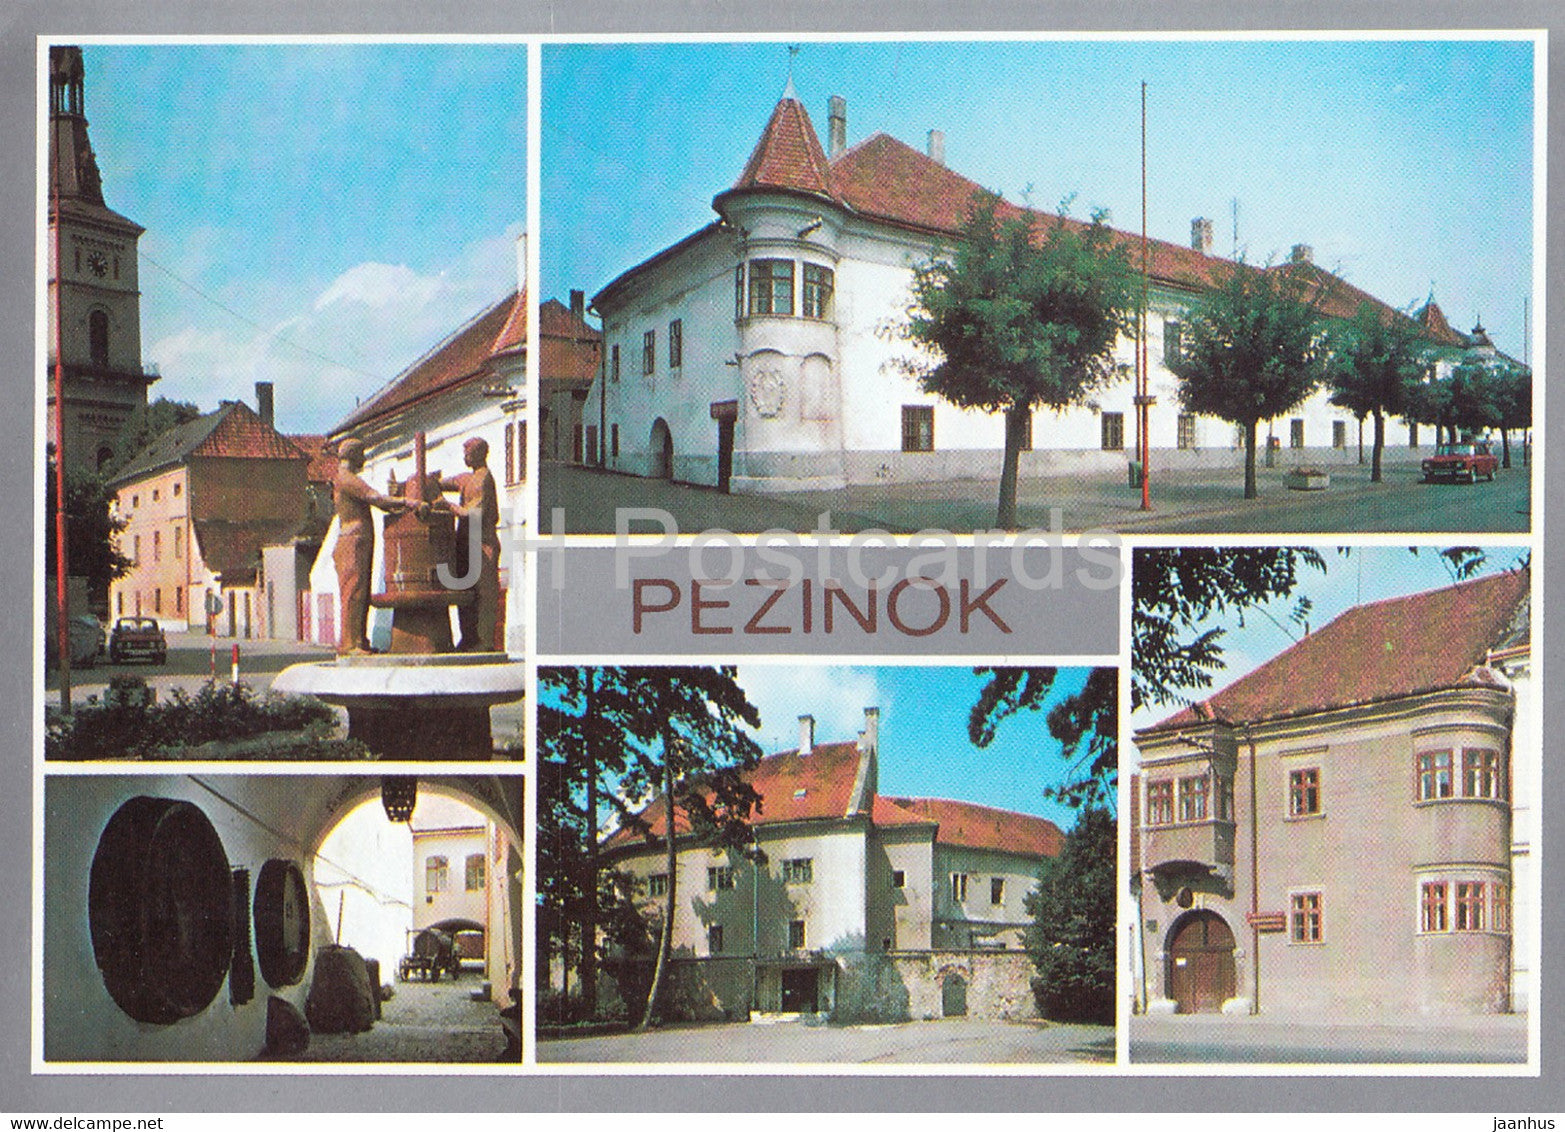 Pezinok - square - musical school - museum - multiview - Czechoslovakia - Slovakia - used - JH Postcards